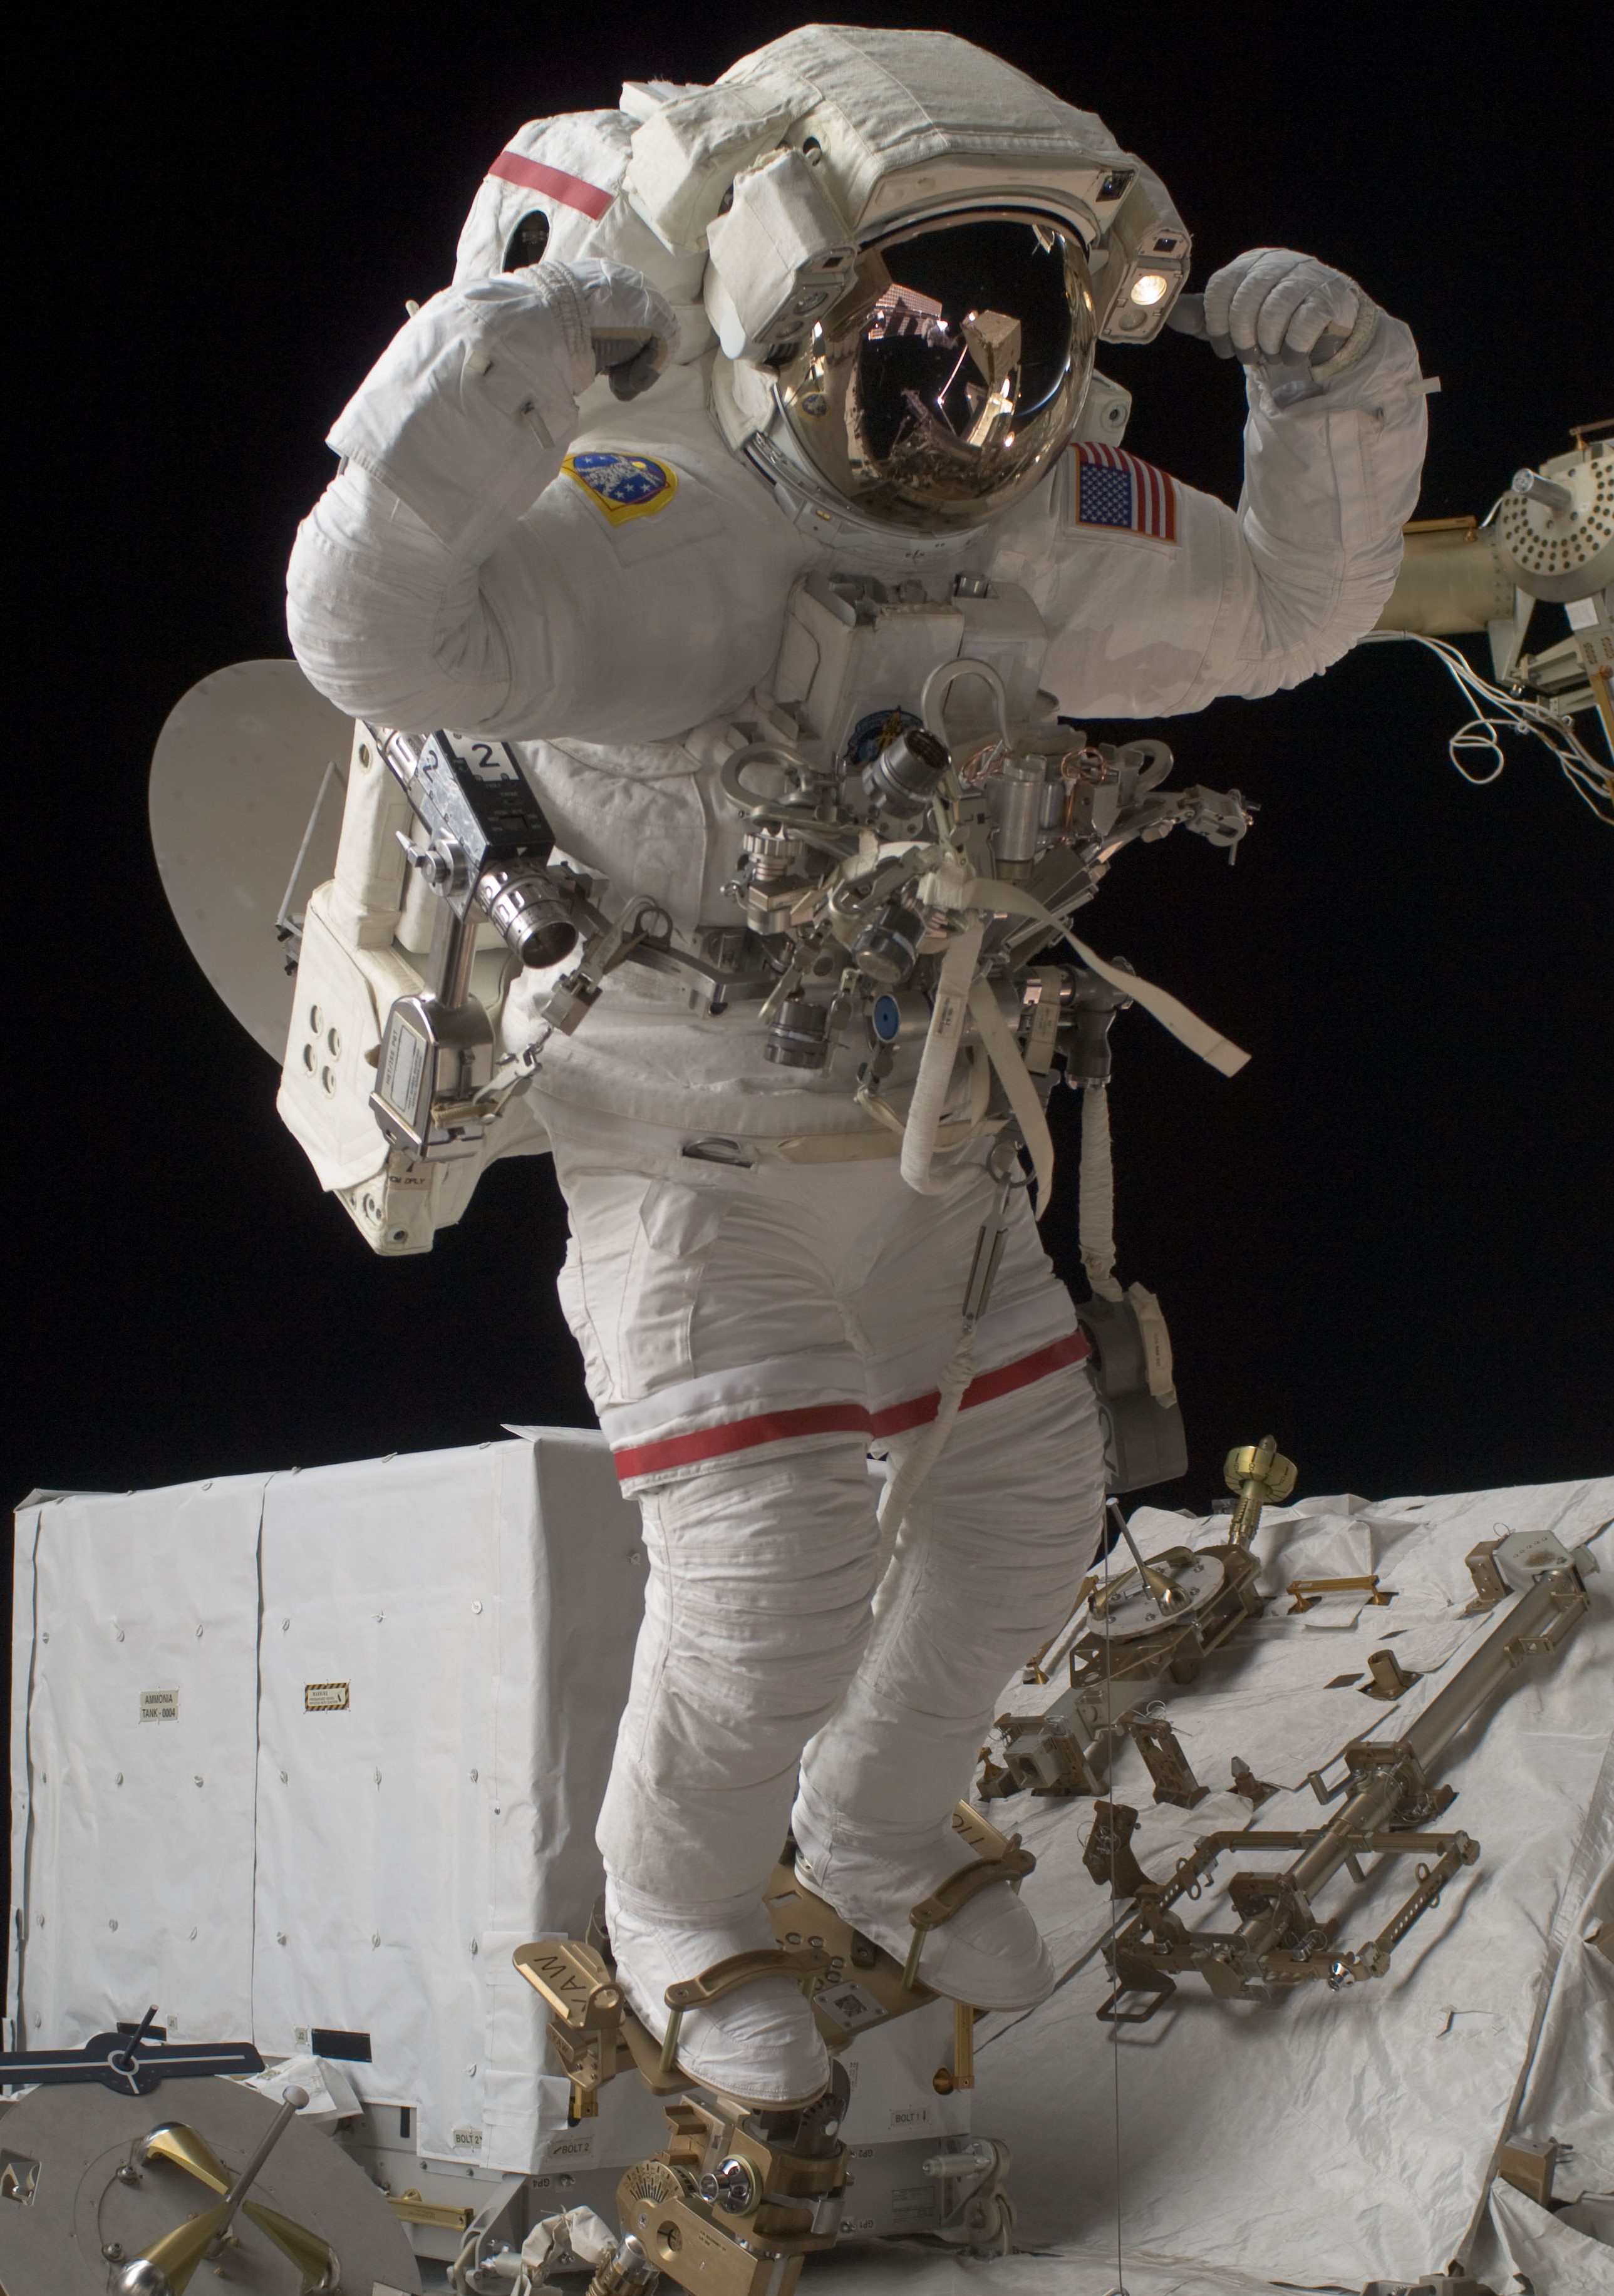 NASA astronaut John D. “Danny” Olivas poses during spacewalk work on the Ammonia Tank Assembly.